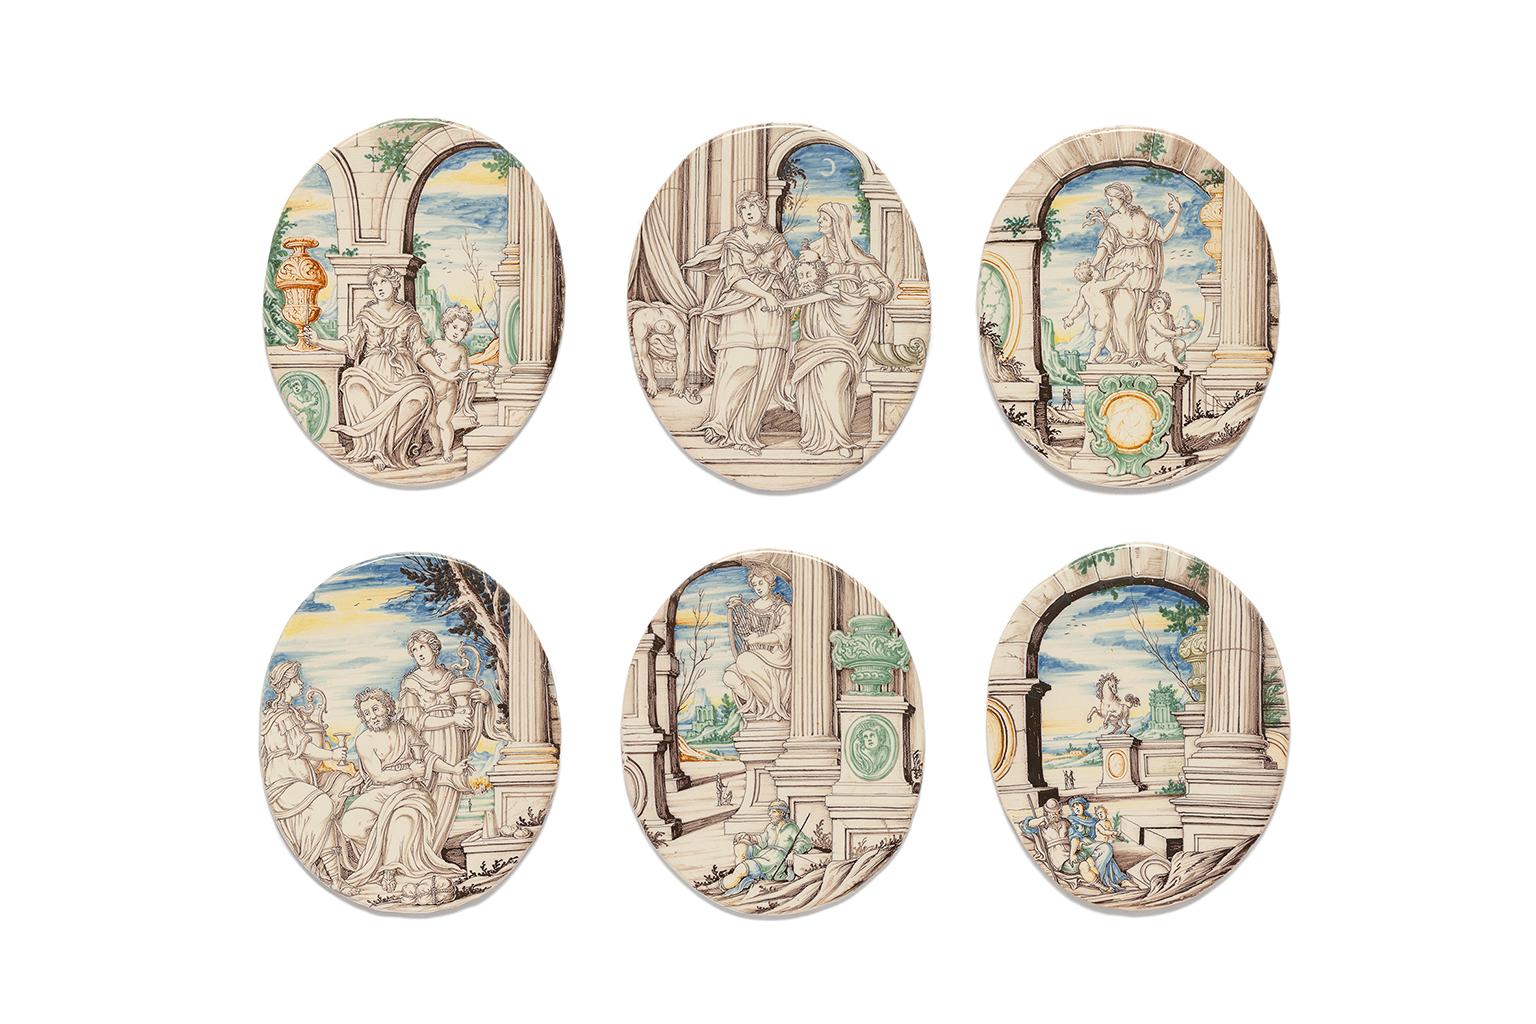 Six maiolica “ambrogette” (tiles) 
Rampini manufactory, painter probably Siro Antonio Africa
Pavia, 1693-1704
a)	6.88 x 5.51 in (17.5 x 14 cm); 0.55 lb (252 g)
b)	7.08 x 5.70 in (18 x 14.5 cm); 0.51 lb (233 g)
c)	6.88 x 5.70 in (17.5 x 14.5 cm);